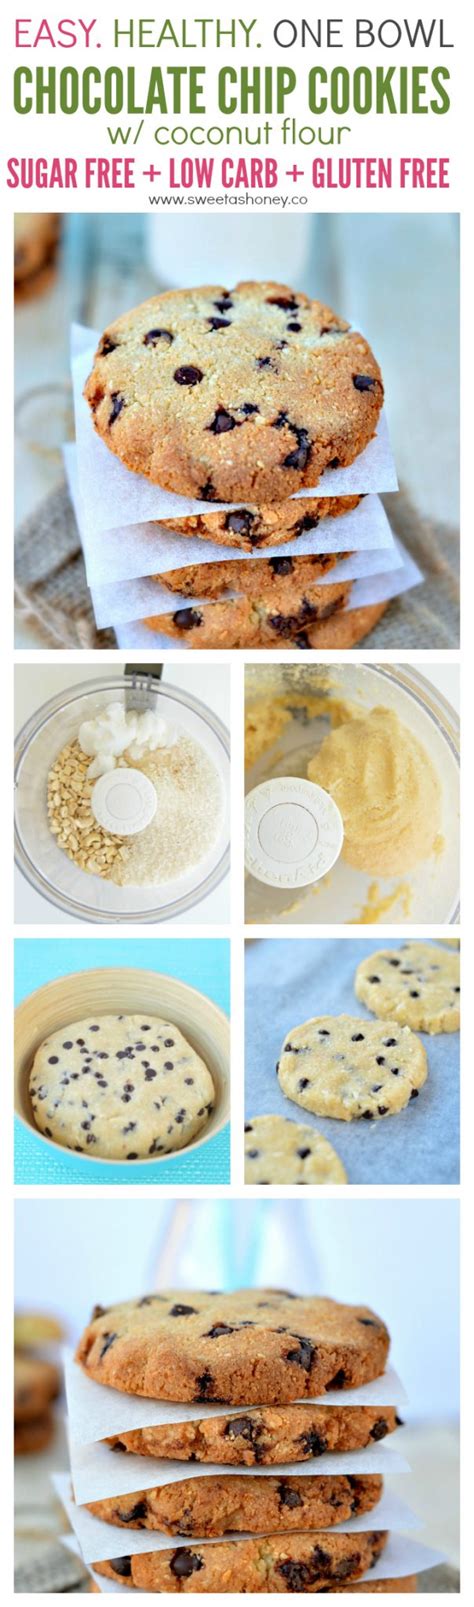 Low sugar banana chocolate chip cookiesoatmeal with a fork. Sugar free chocolate chip cookies | Low Carb, Gluten Free